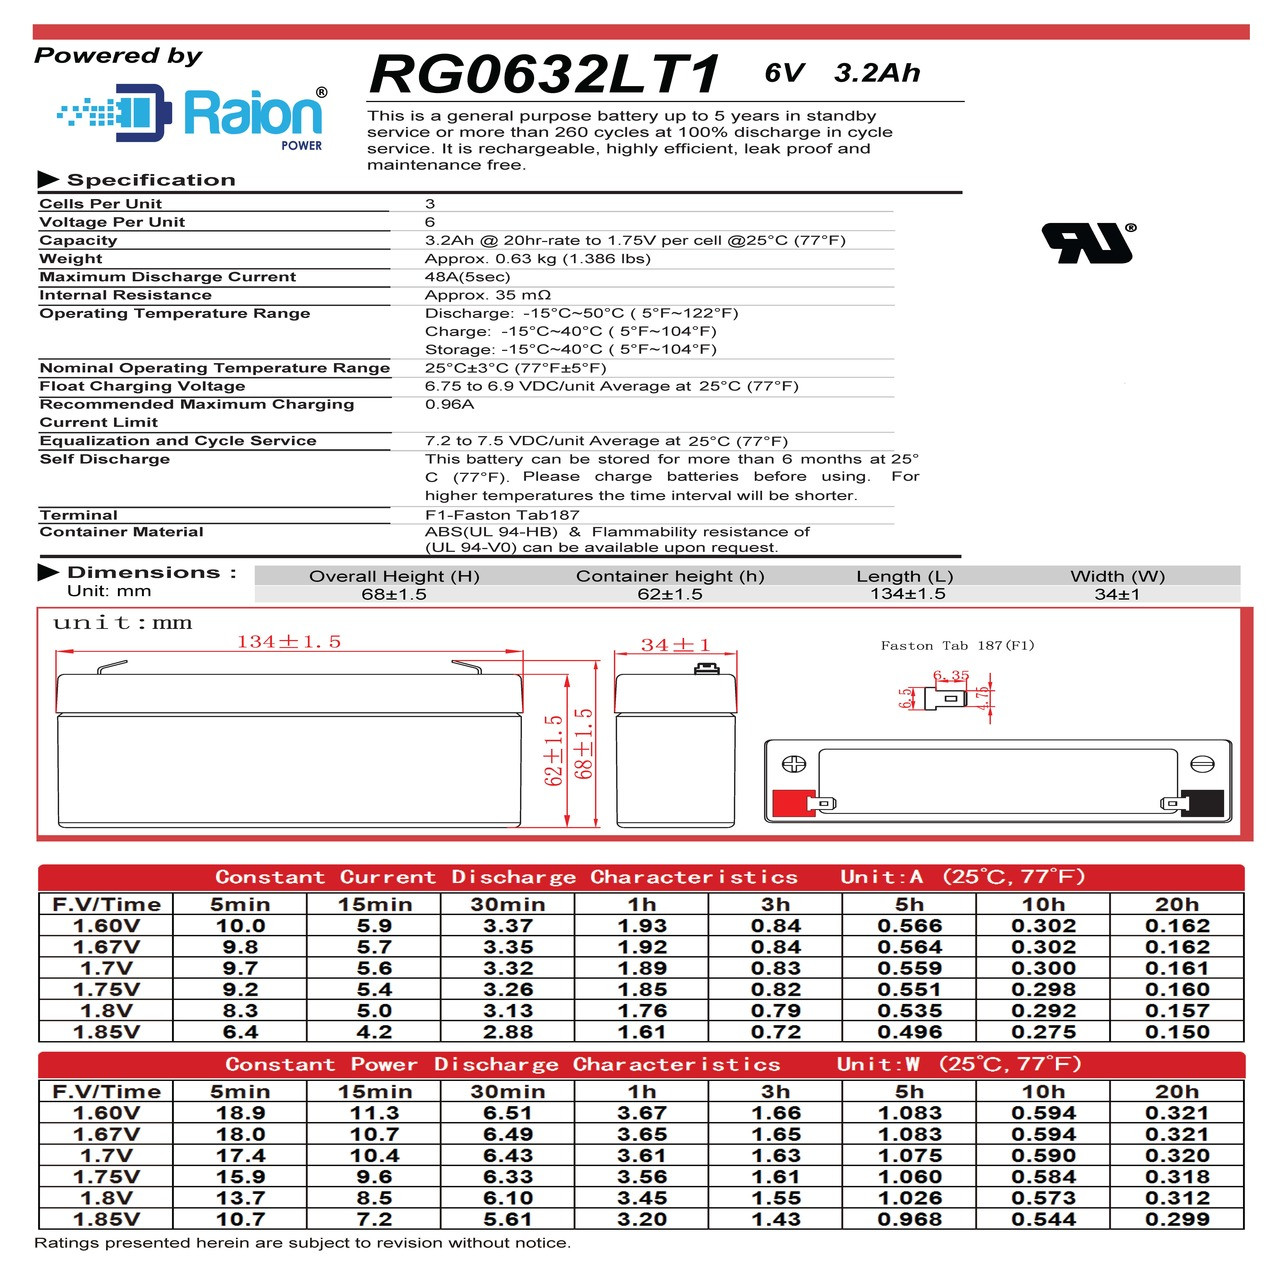 Raion Power RG0632LT1 6V 3.2Ah Battery Data Sheet for Medical Technology Products 1001 Pump